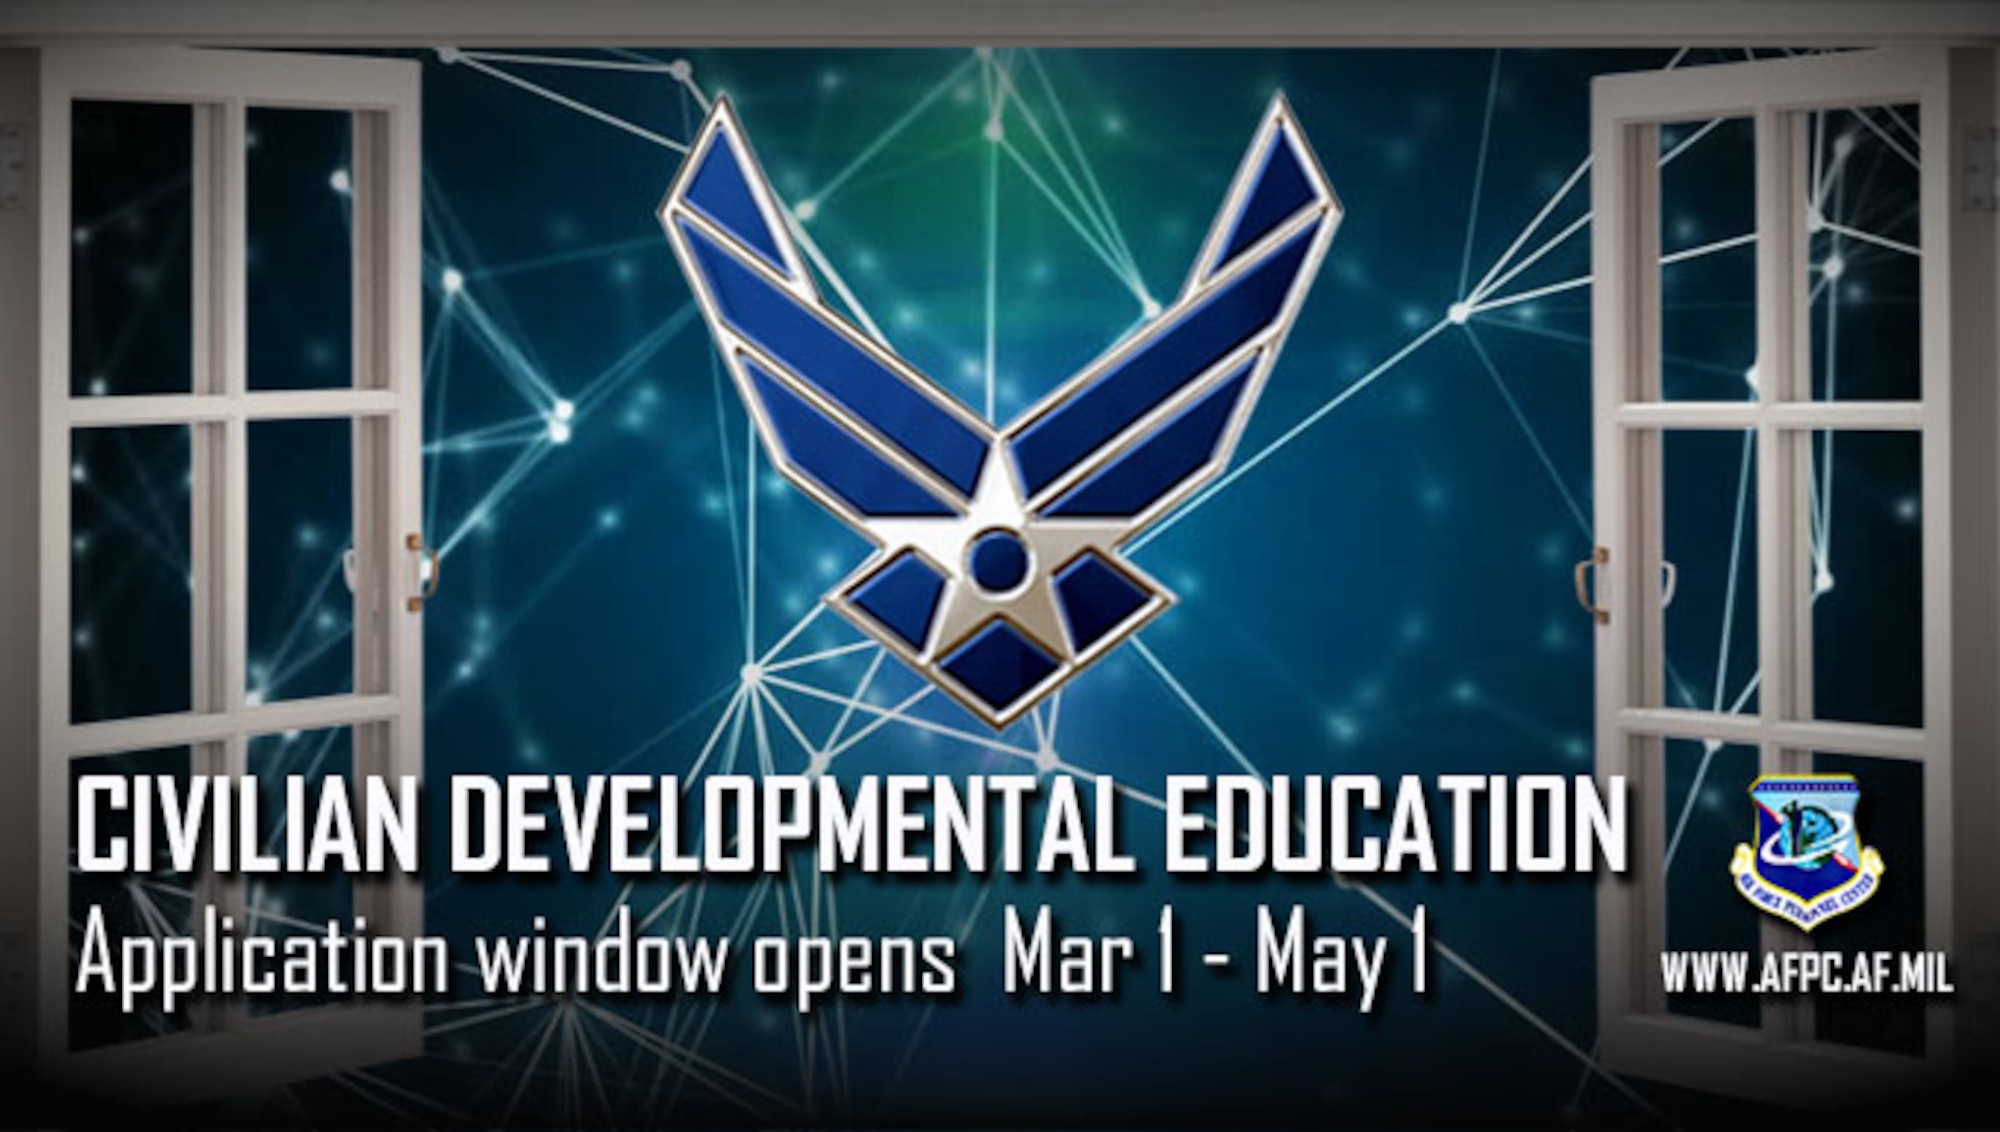 Developmental Education application window opens Mar 1 through May 1, for civilians.